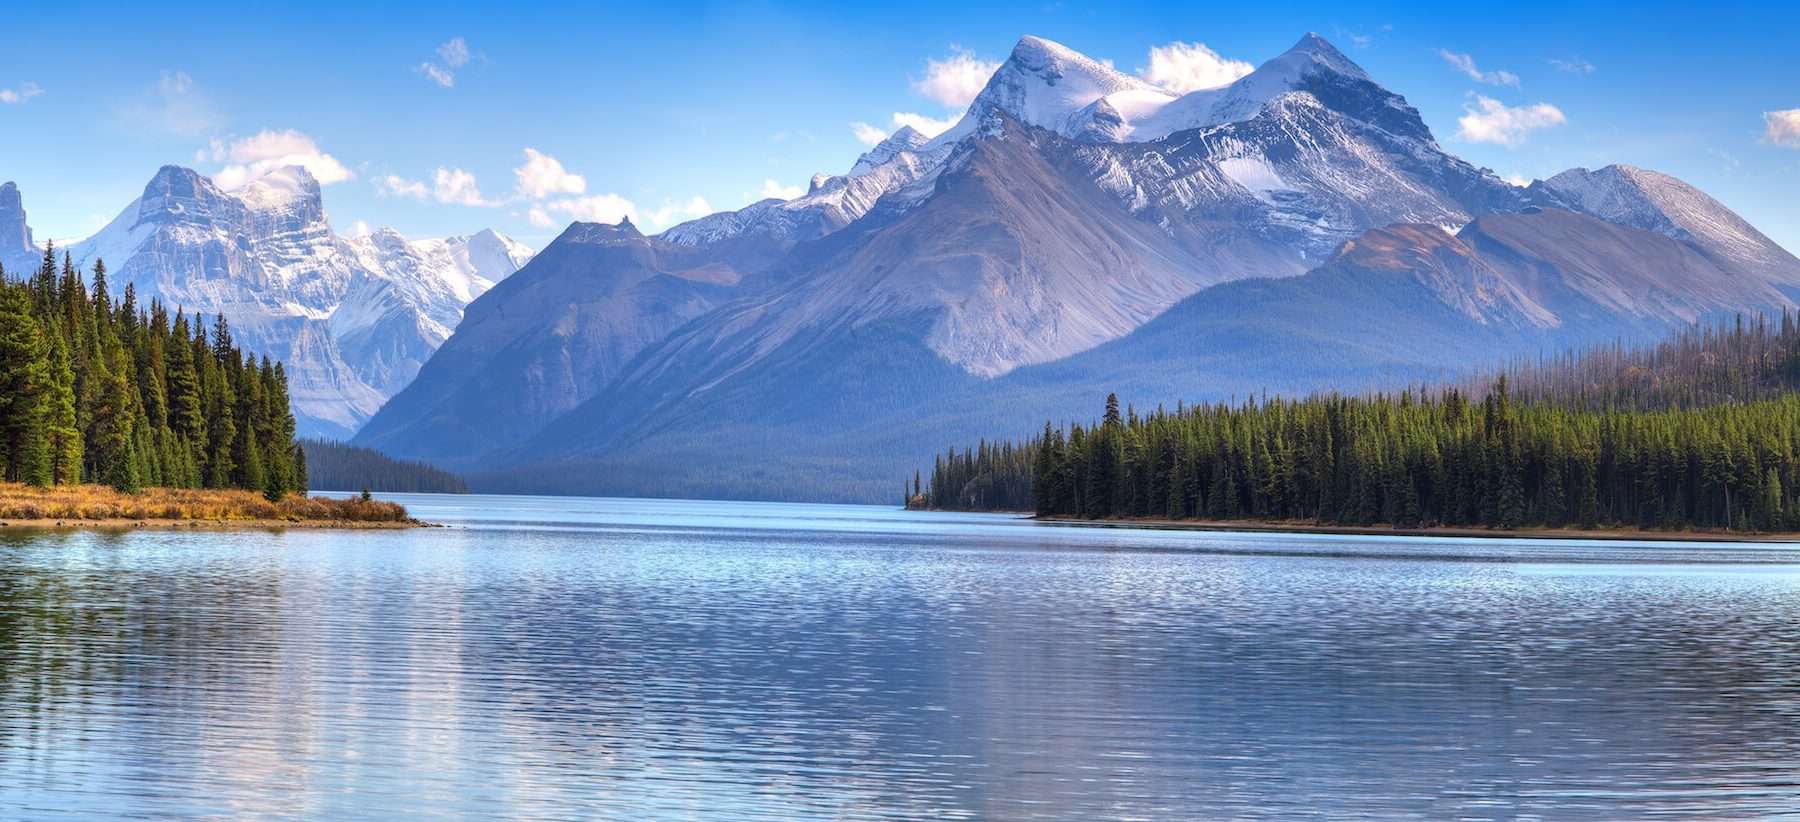 Luxury Canada Holidays - Beautiful mountain, spruce trees and lake shot